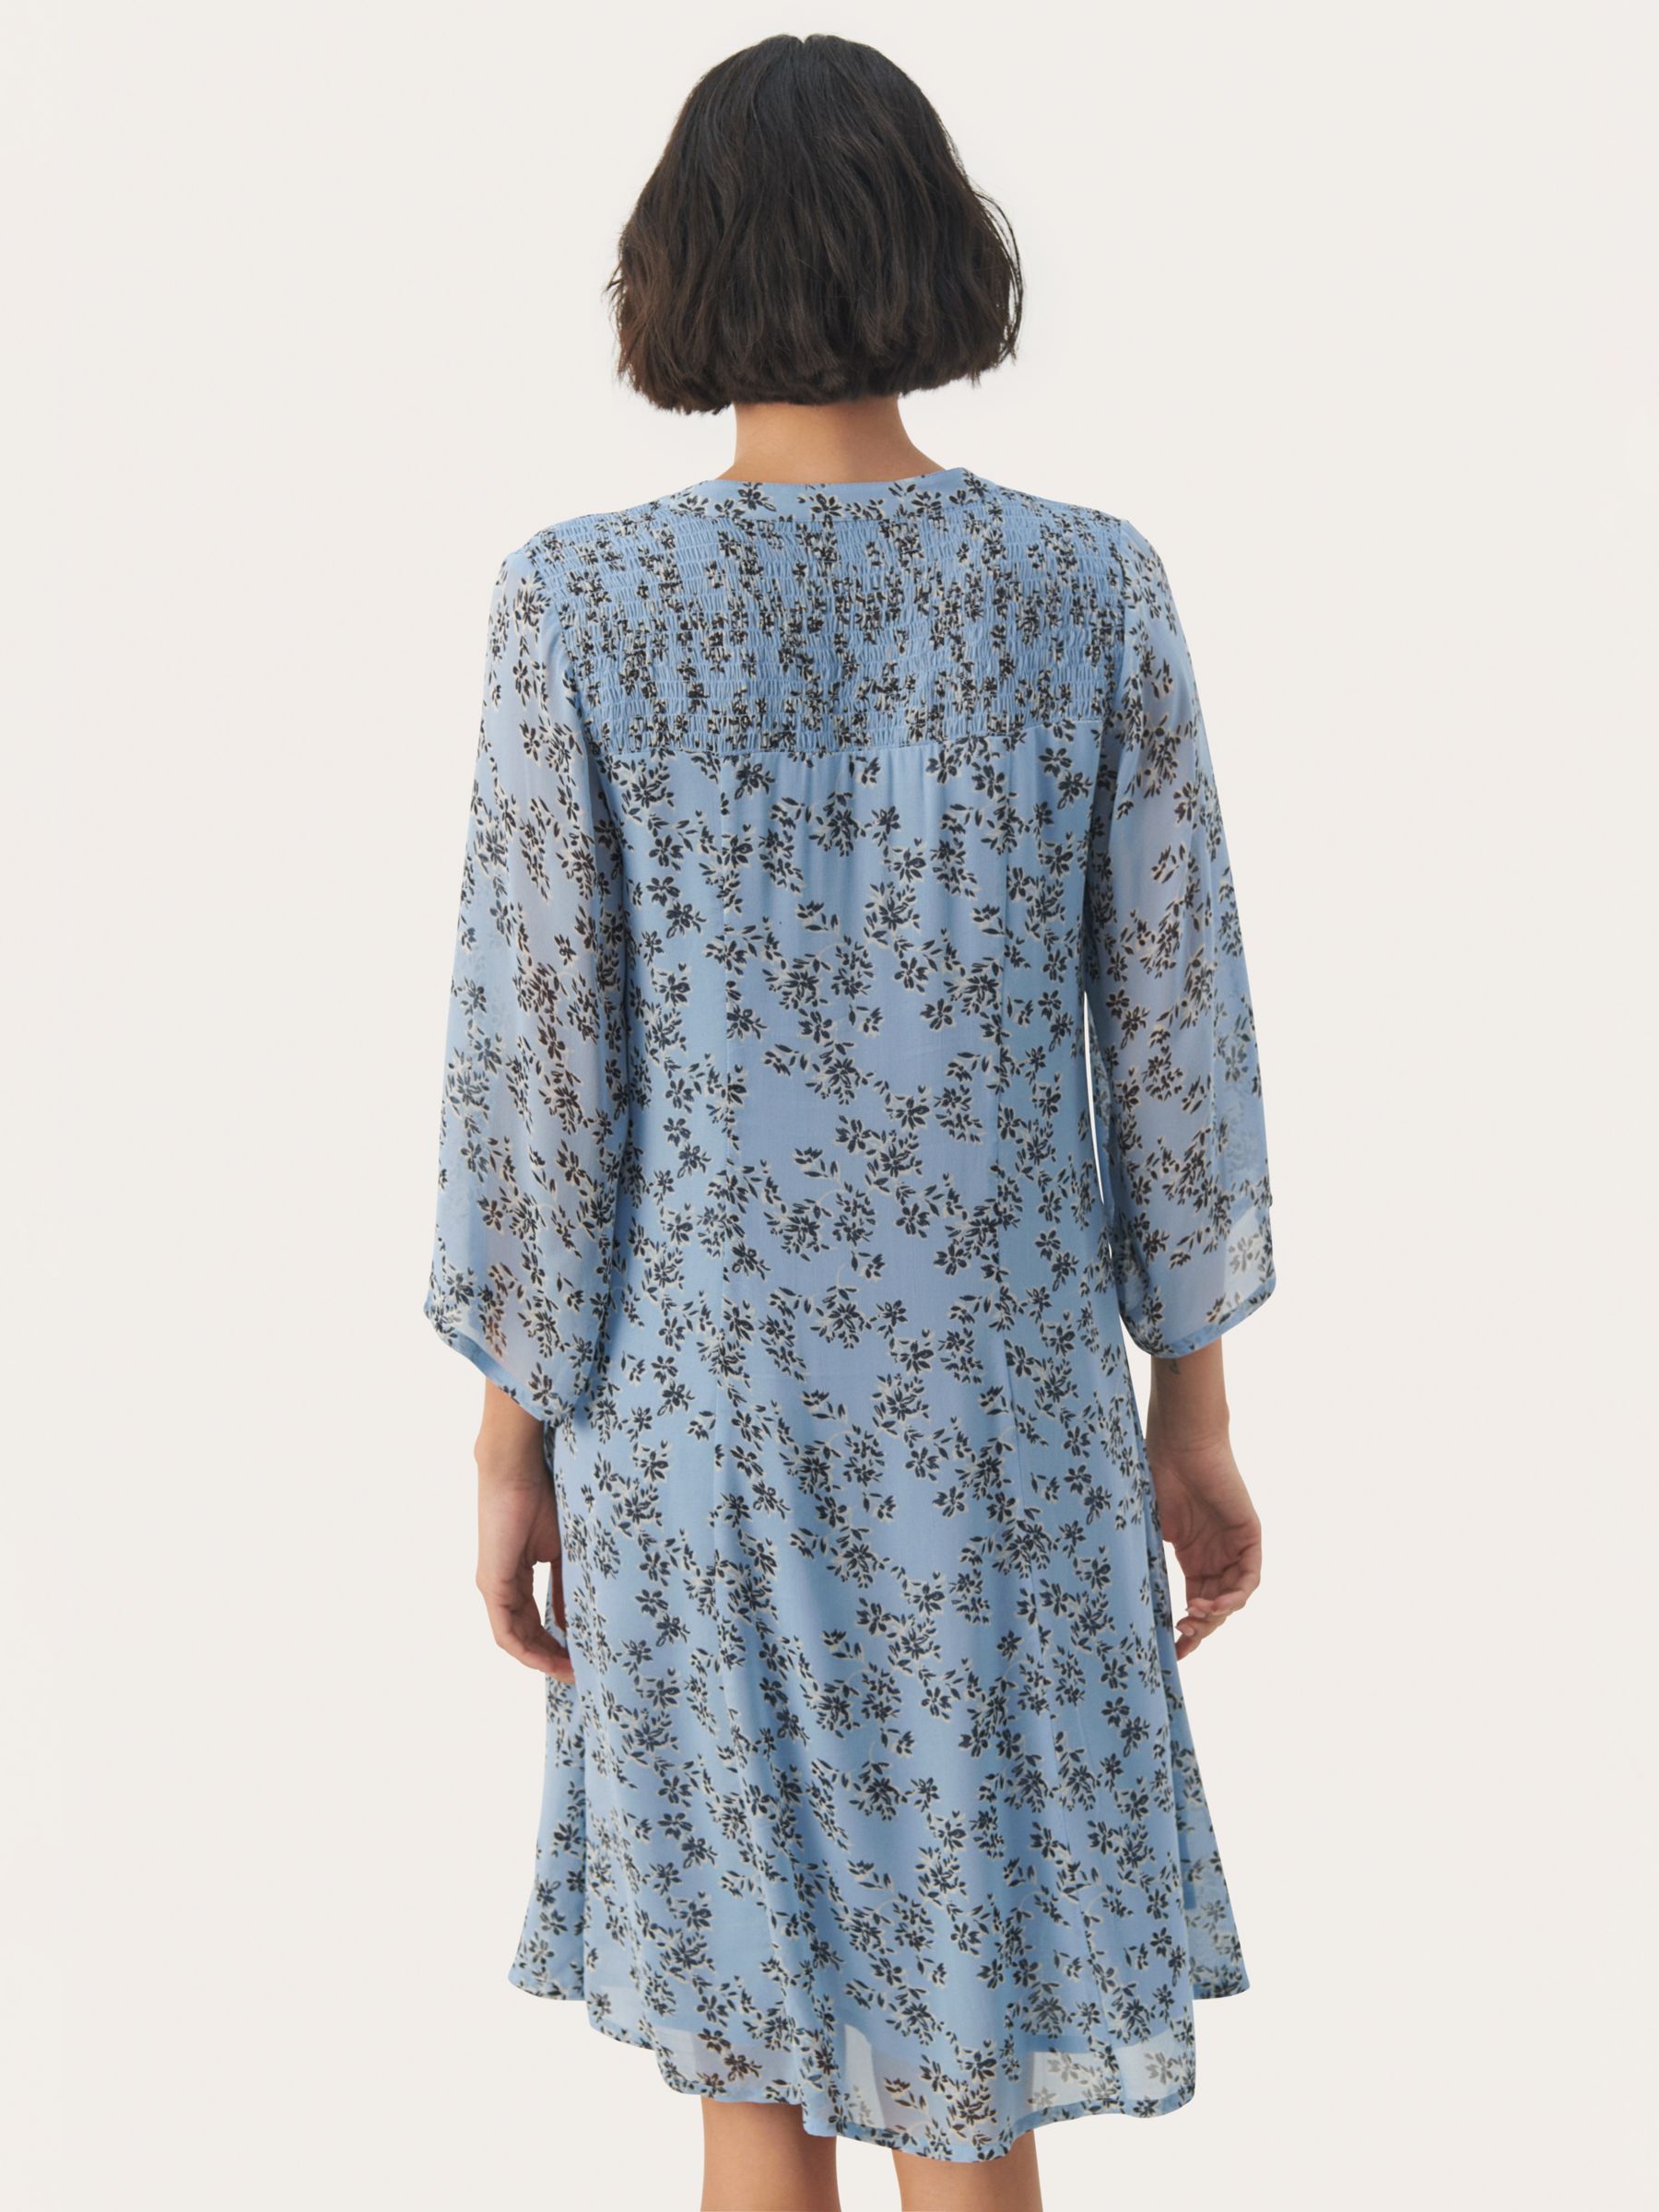 Buy Part Two Elka Floral Chiffon 3/4 Sleeve Dress, Faded Denim Online at johnlewis.com